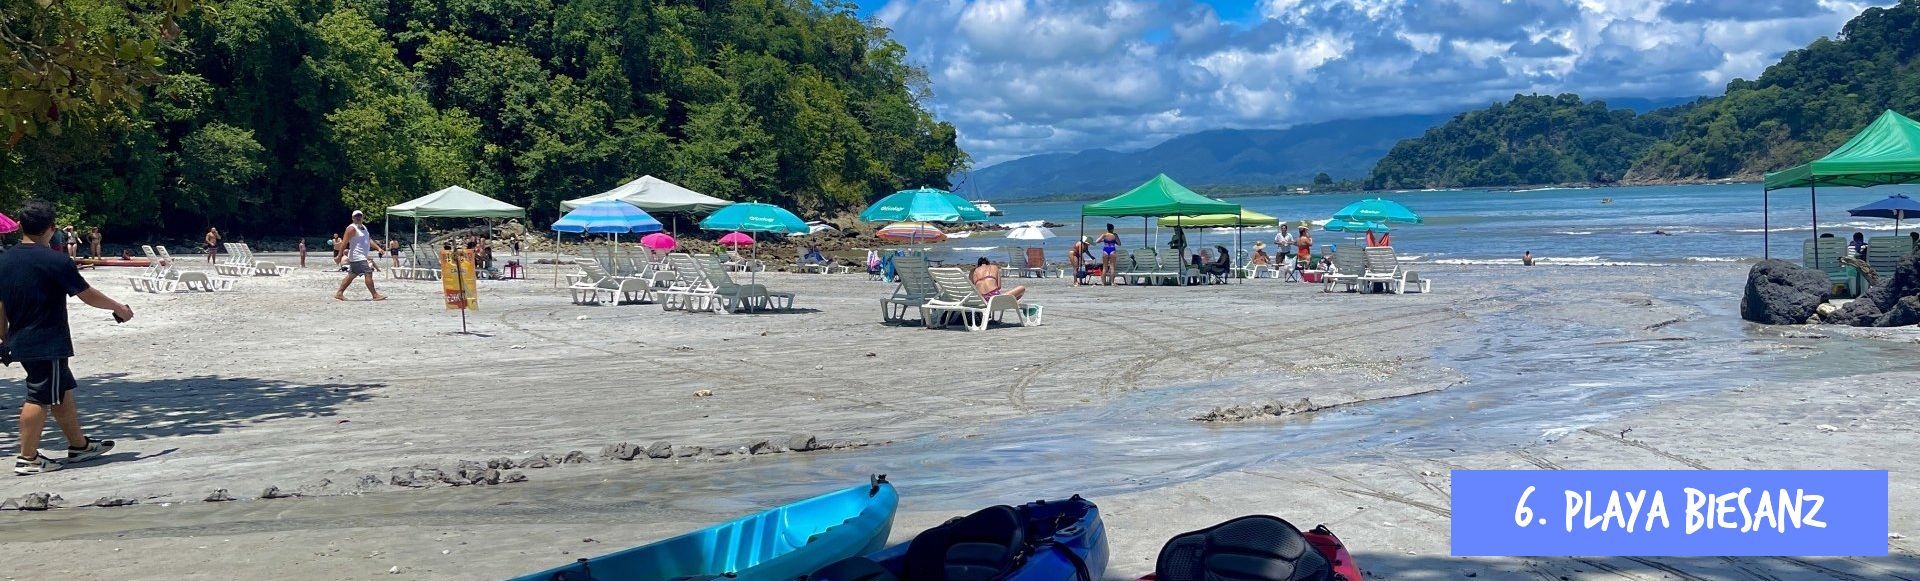 Playa Bisanz Manuel Antonio minutes from your hotel